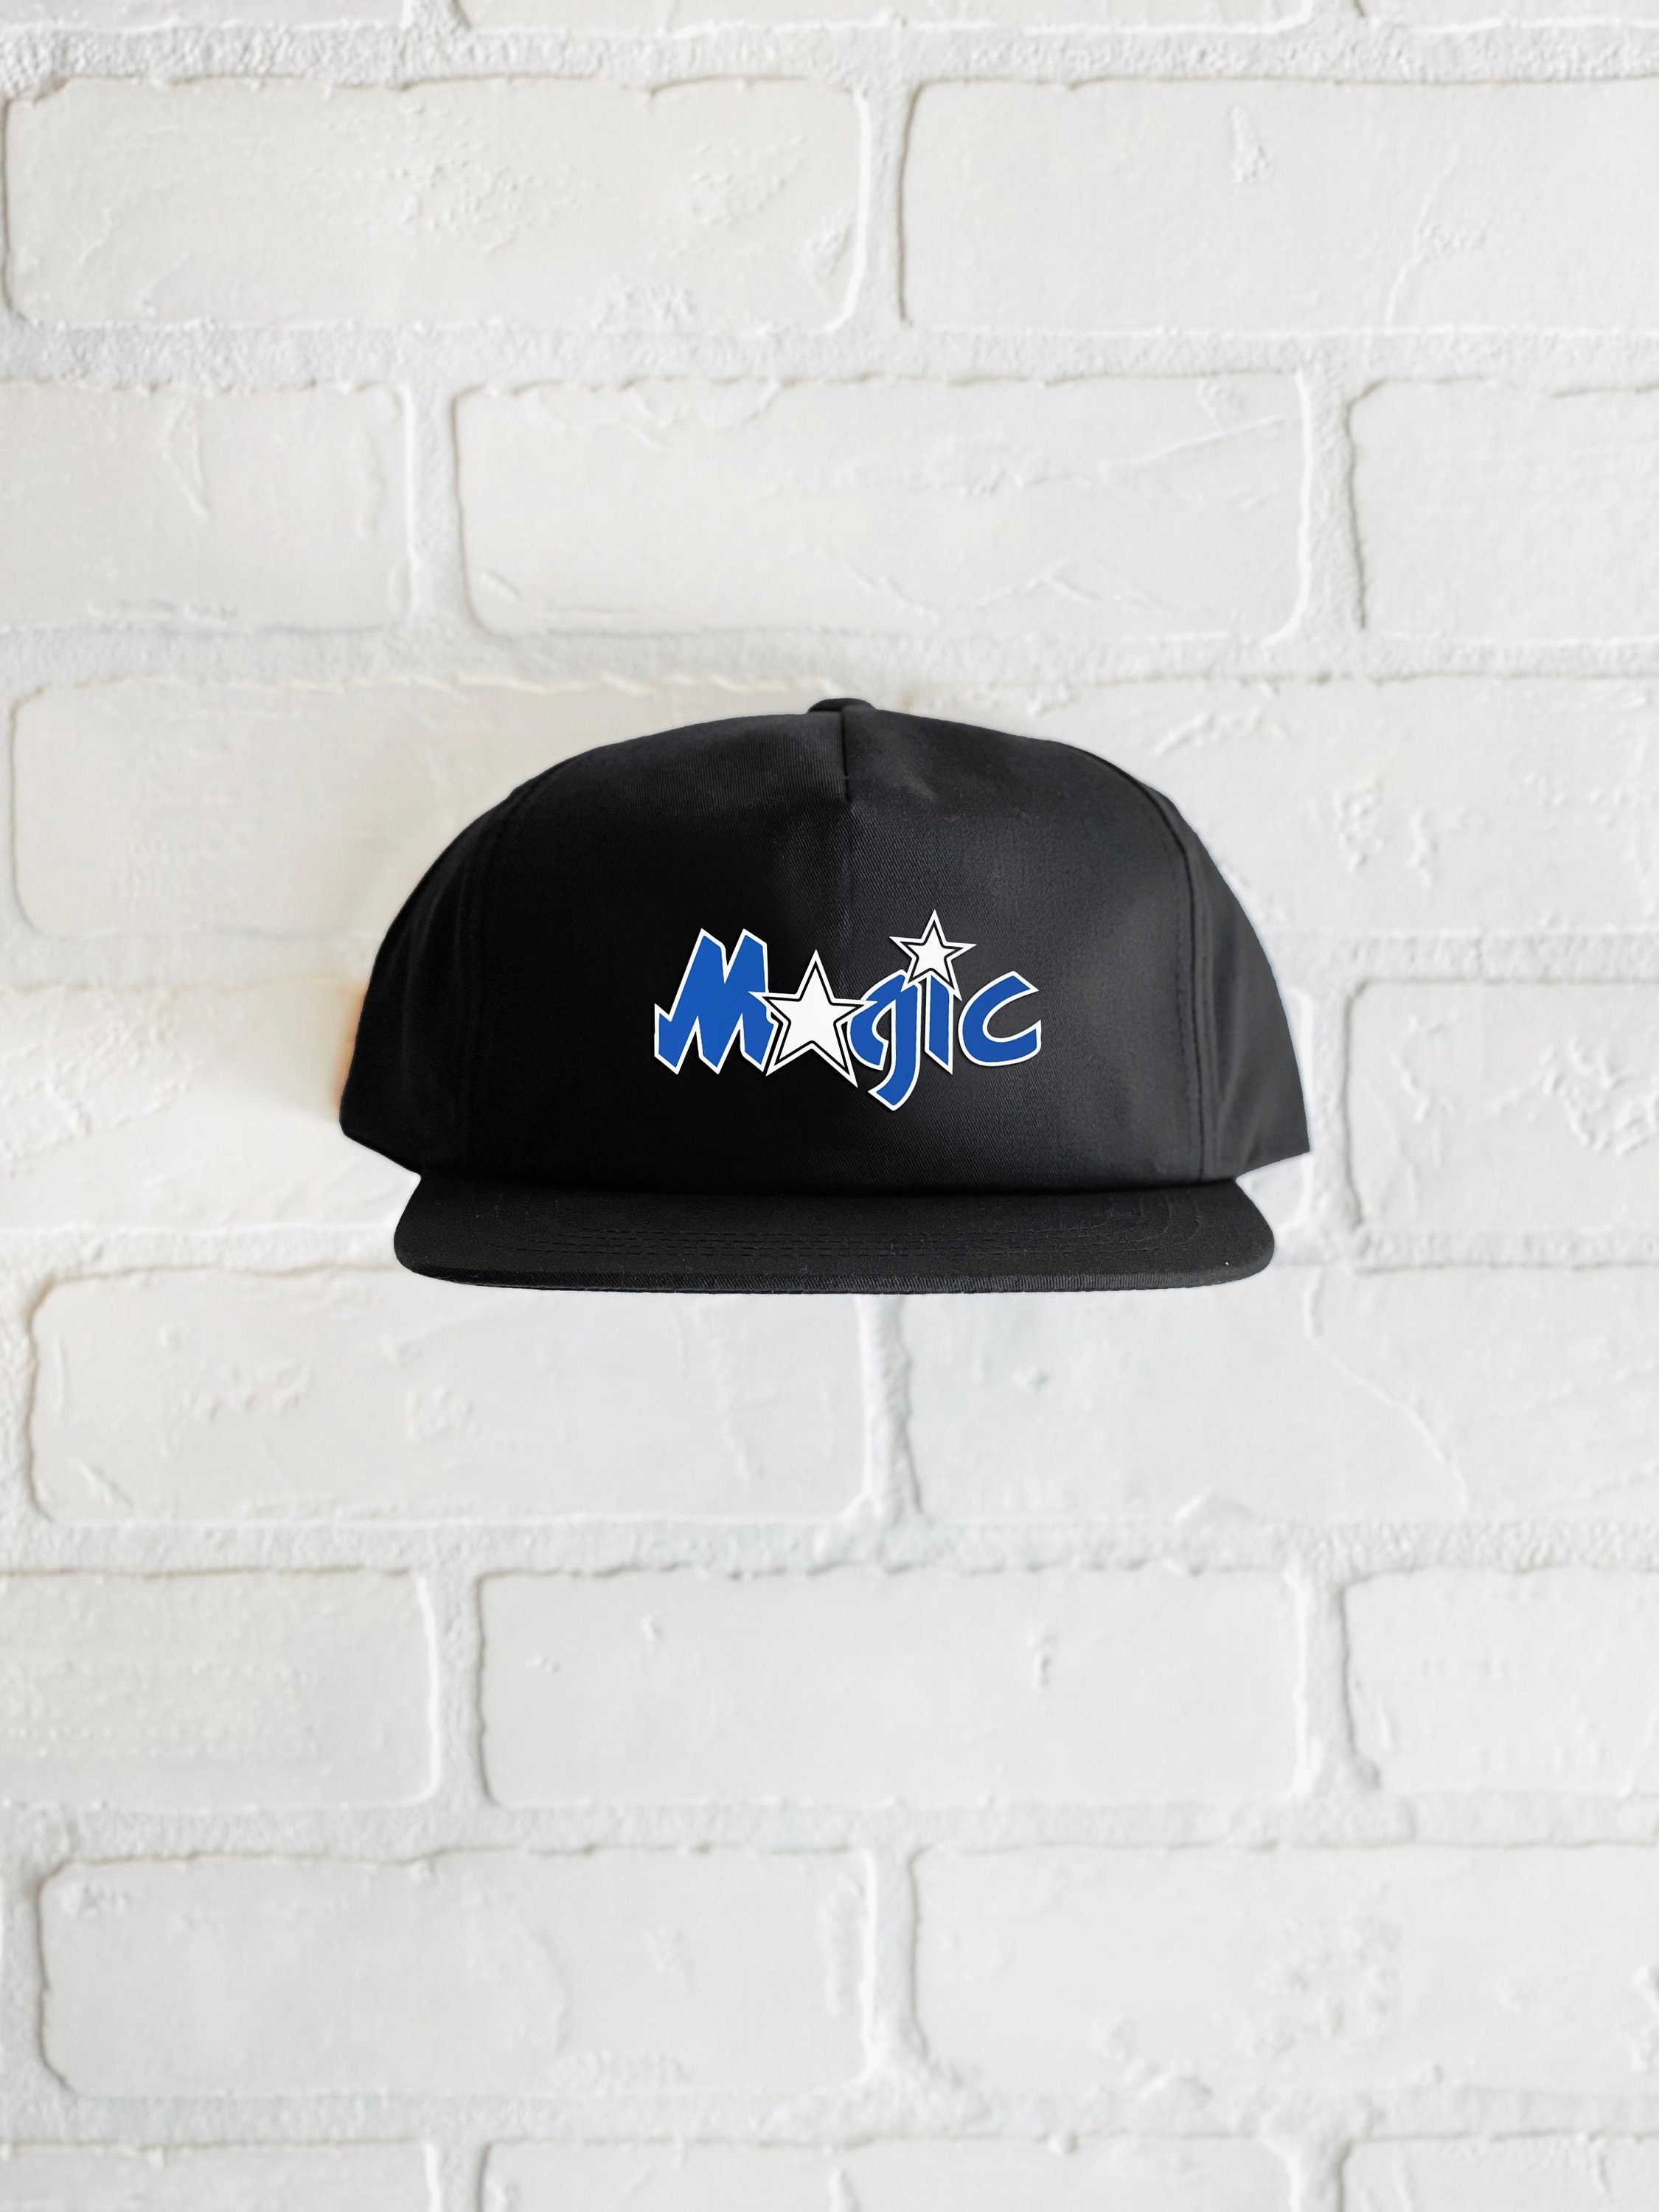 Orlando Magic Team Script Golfer NBA Snapback Hat – Basketball